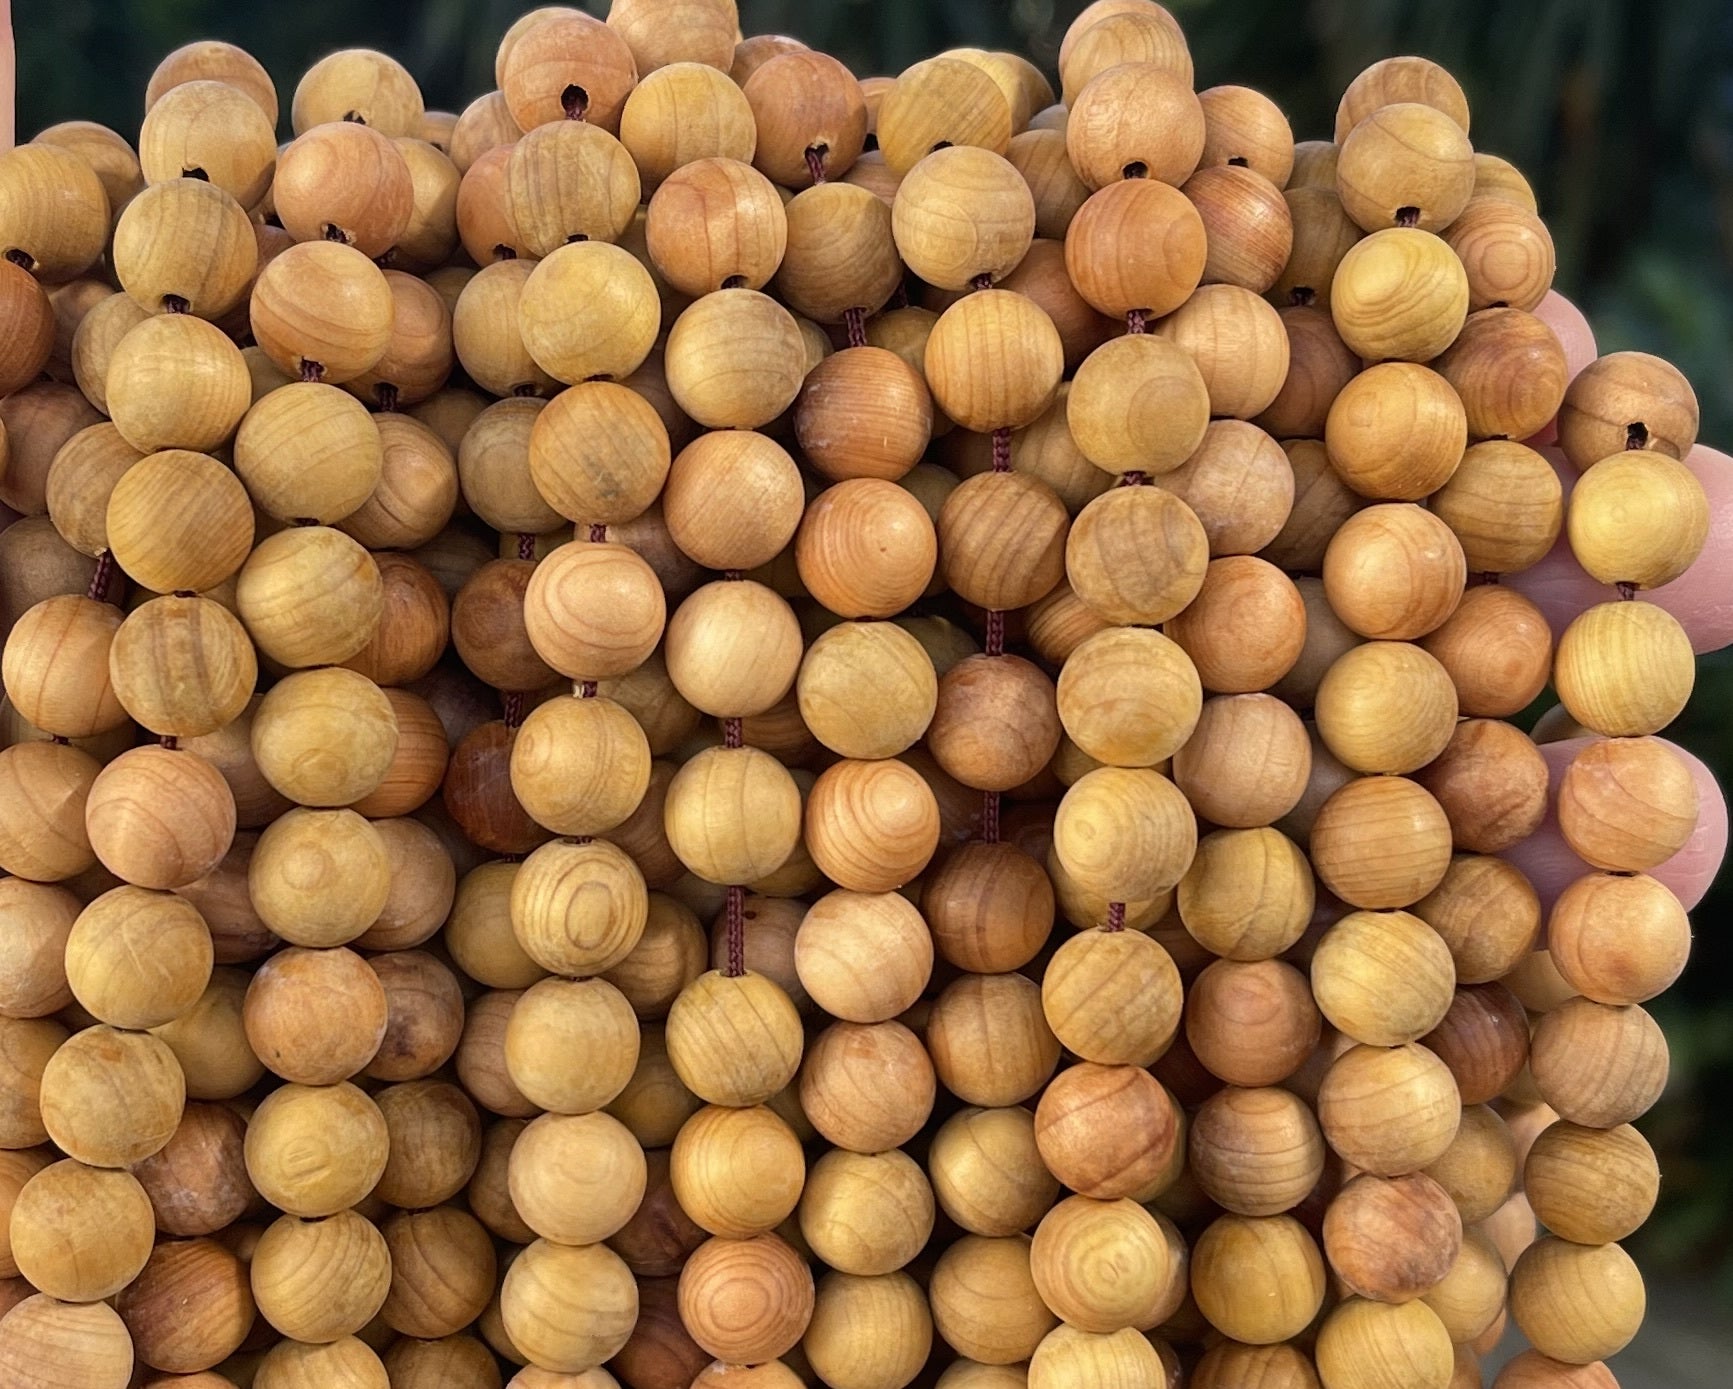 Golden Sandalwood 10mm round natural aromatic wood beads 16" strand - Oz Beads 